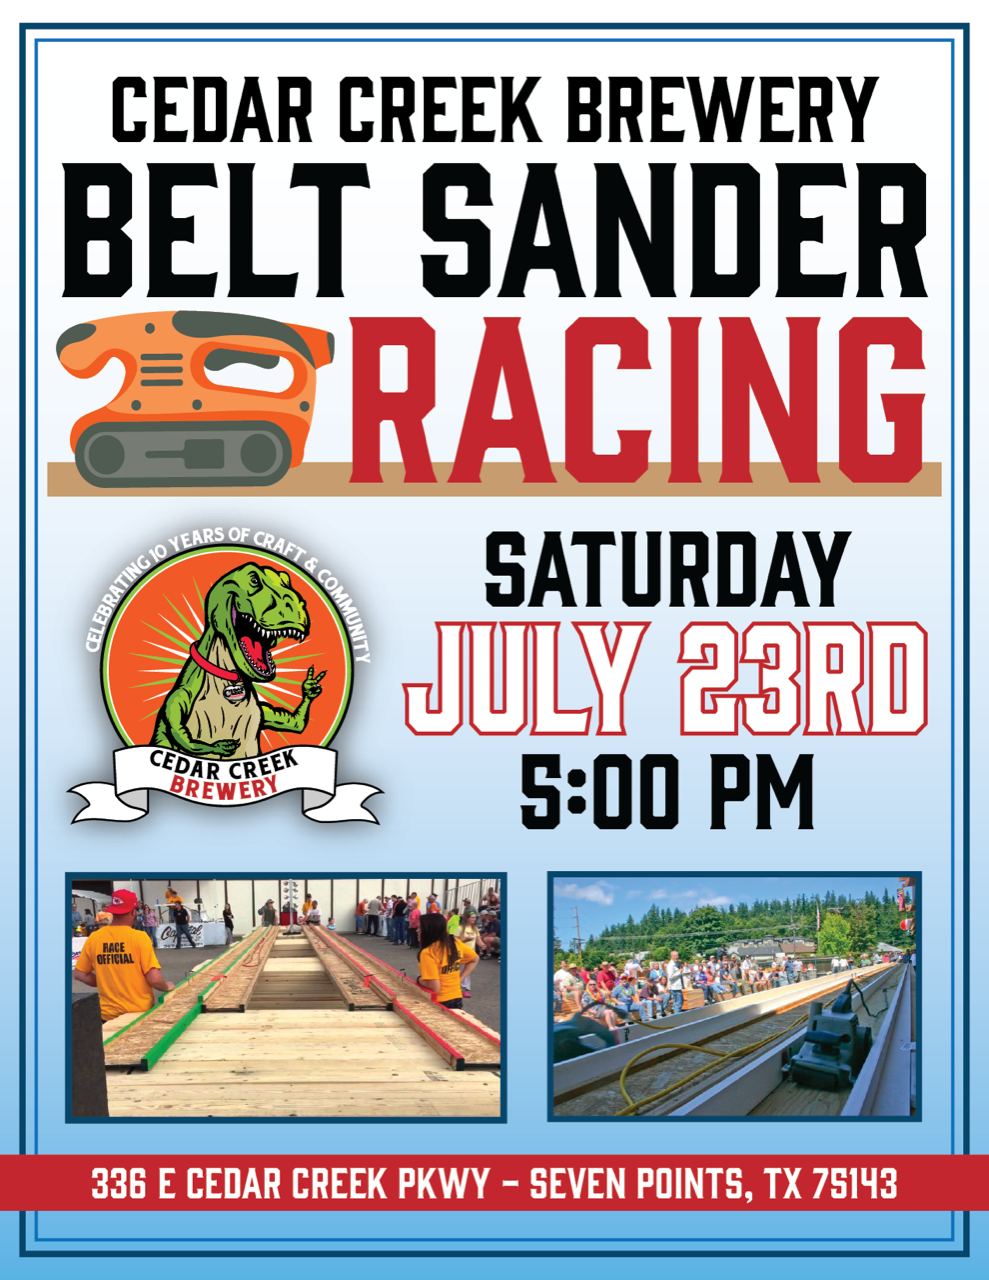 Belt Sander Racing at Cedar Creek Brewery 1 belt sander racing CedarCreekLake.Online